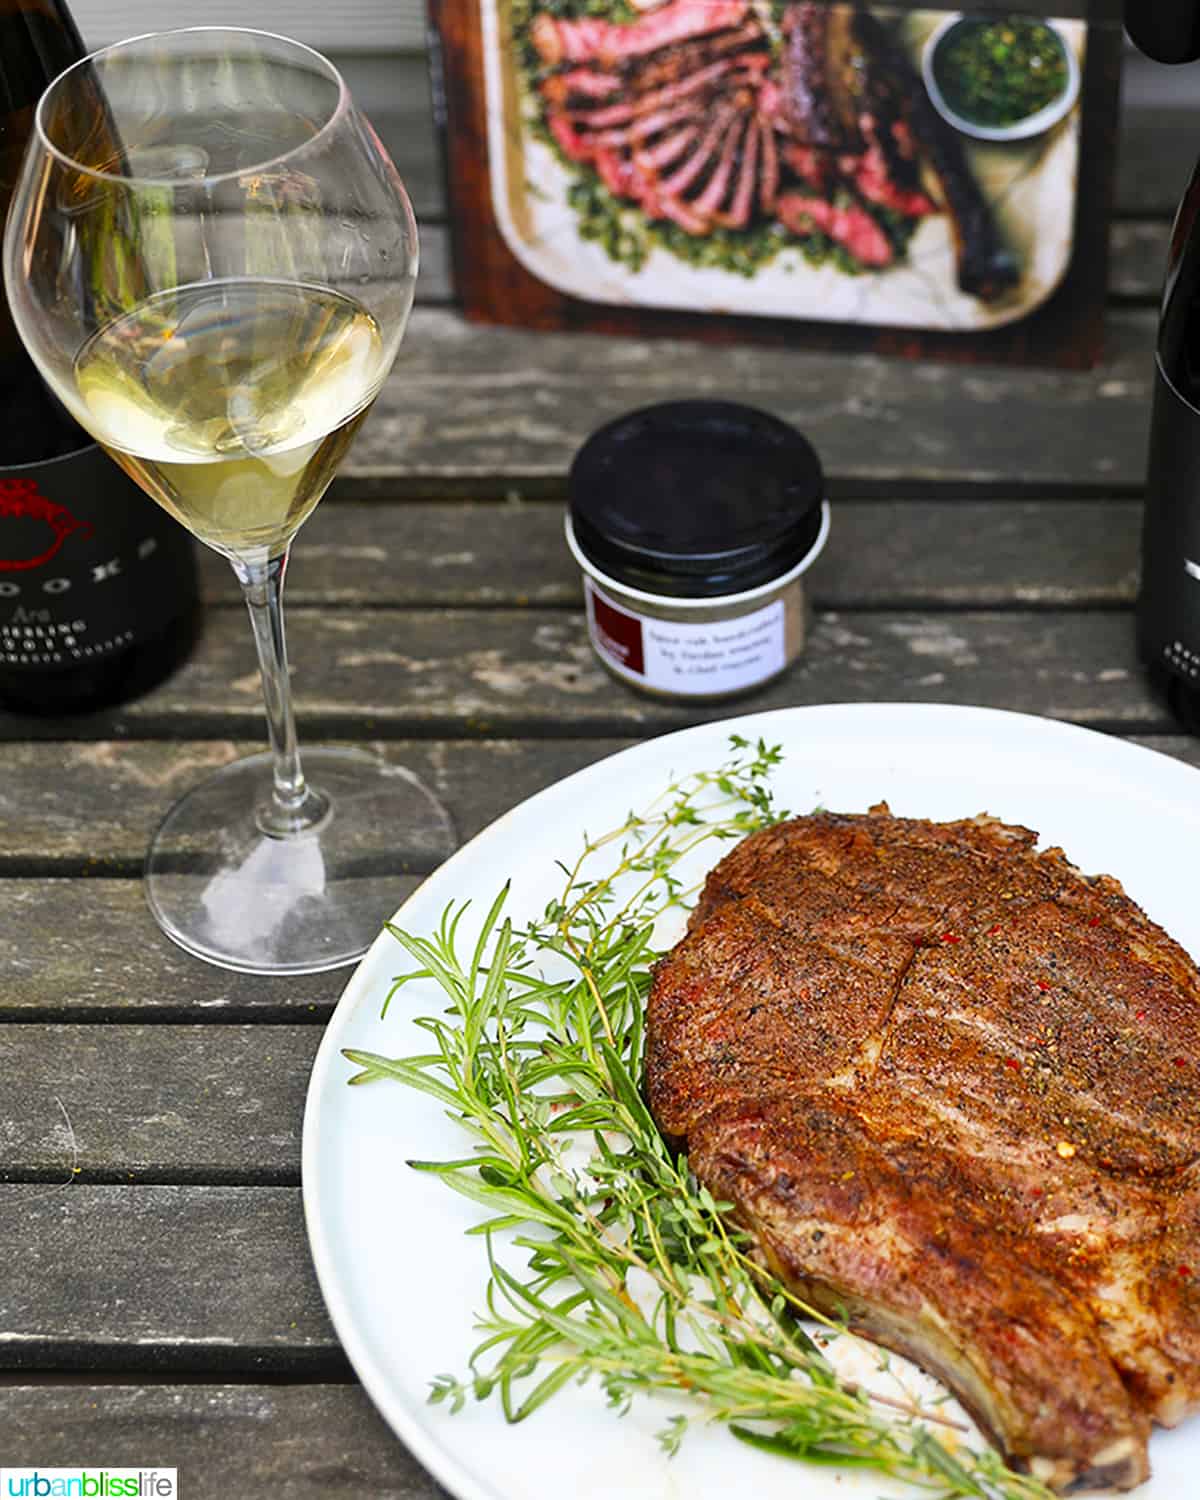 glass of white wine next to a steak.